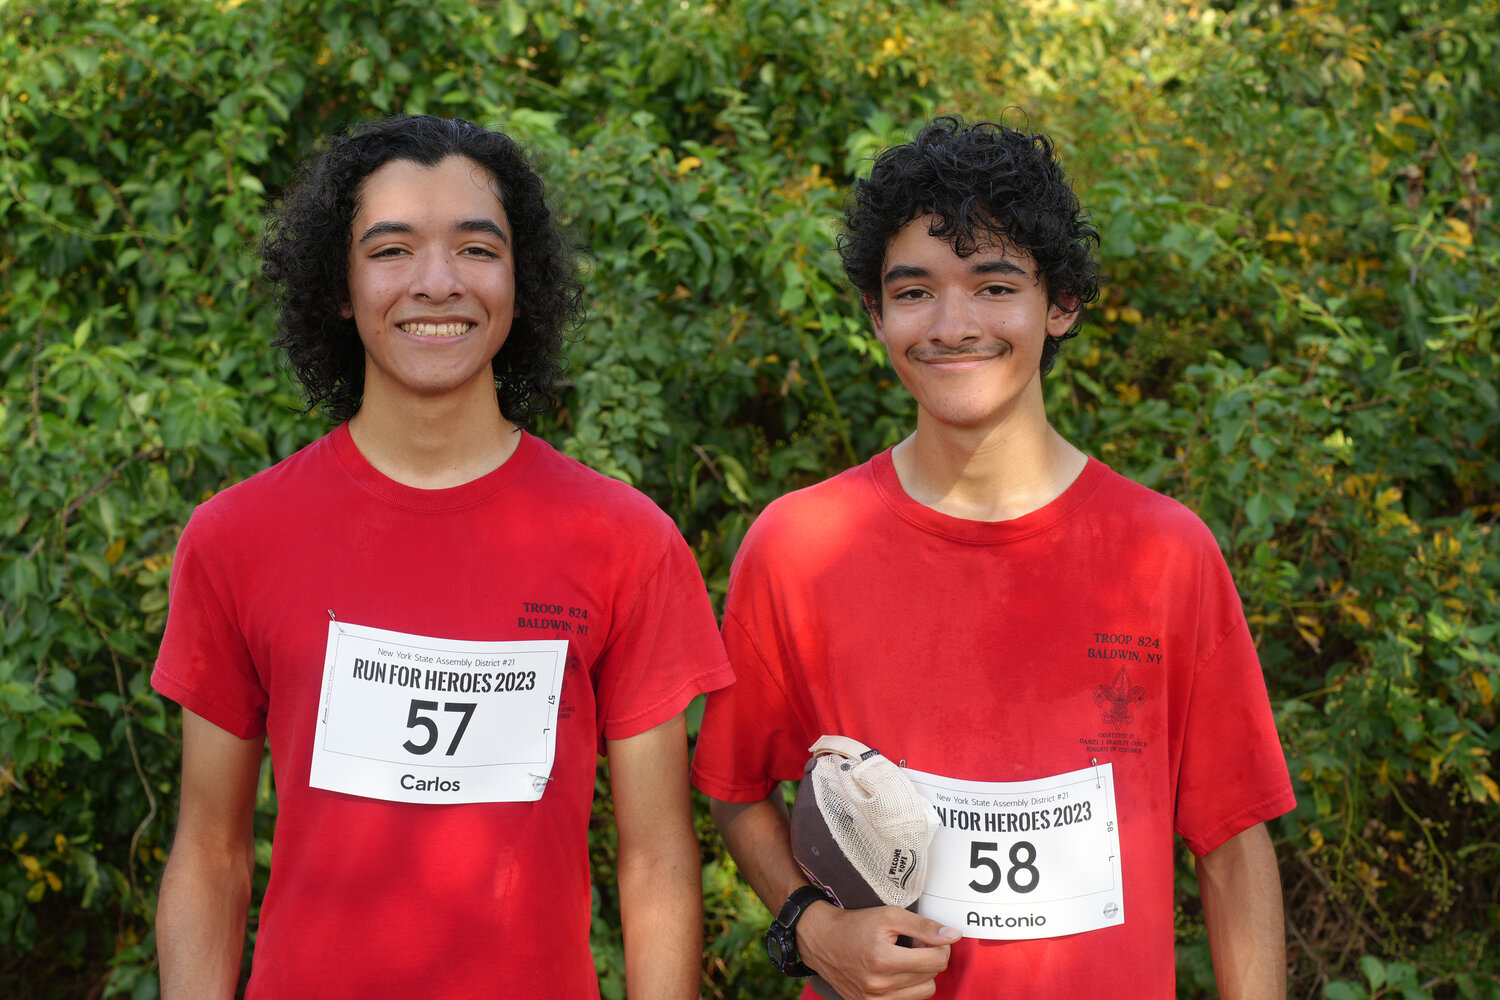 Carlos Santana and Antonio Santana from Freeport participated in the 5k Run for Heroes.